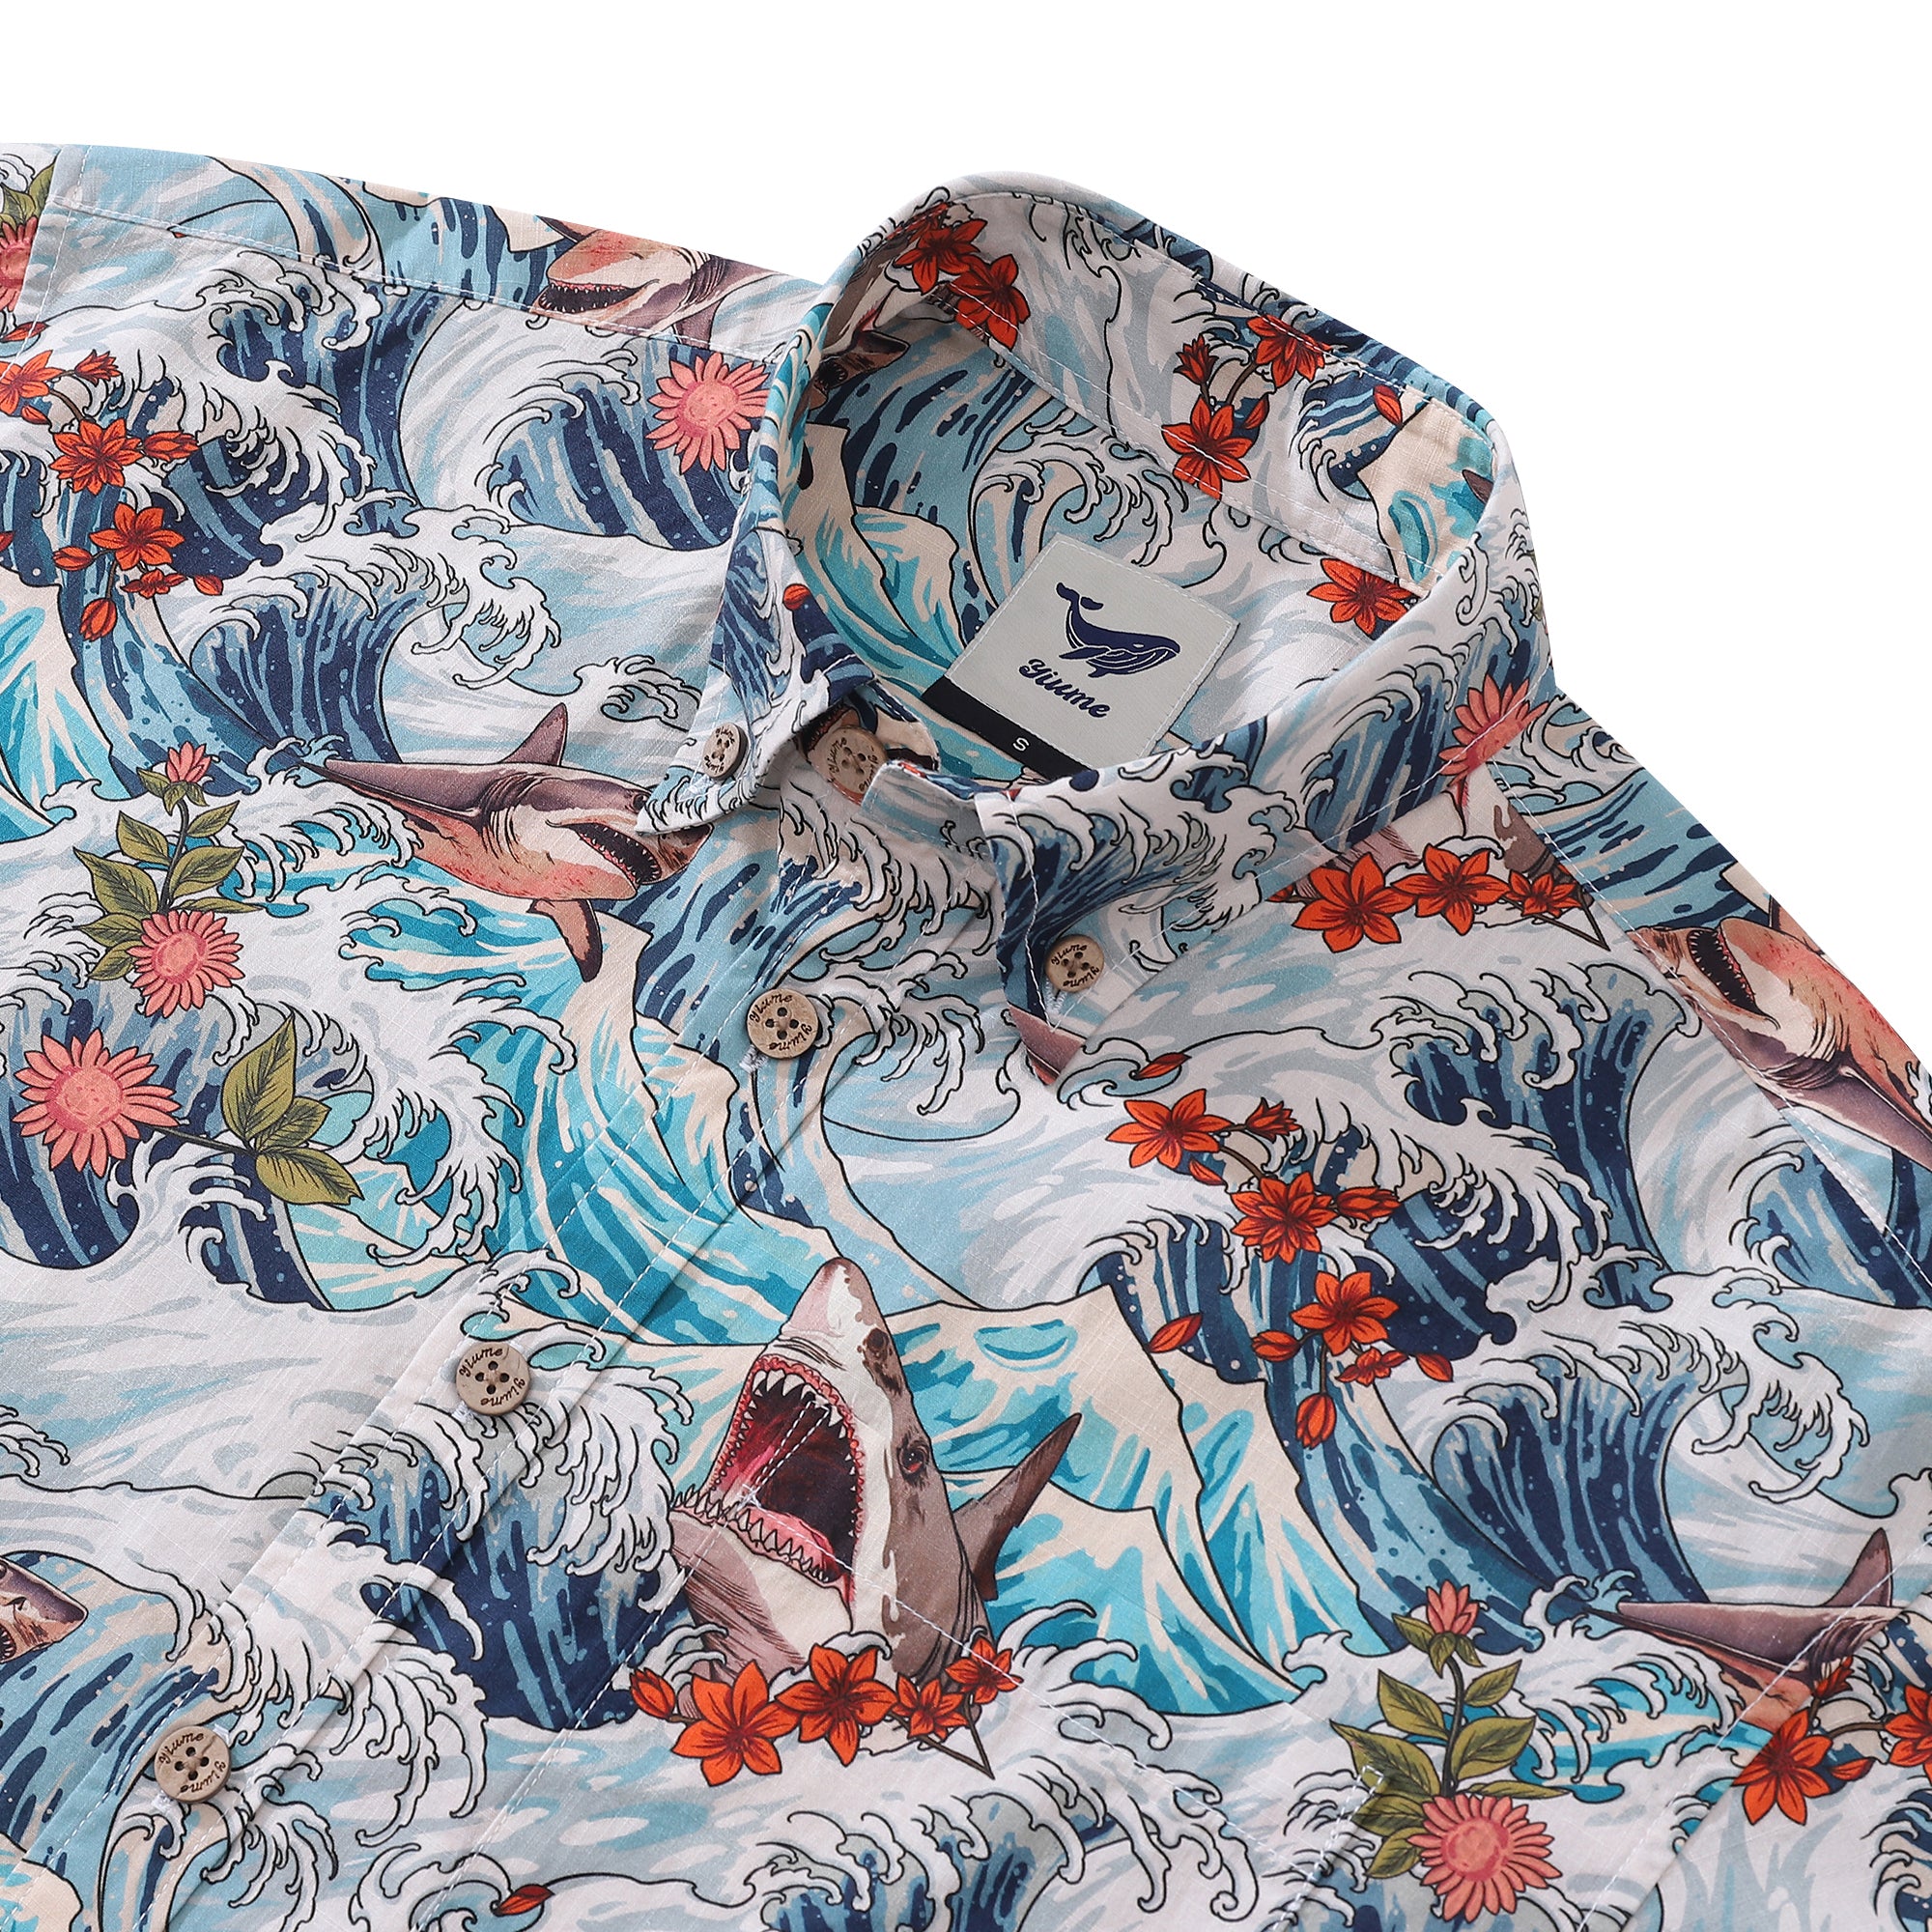 Men's Resort Wear Shirt Turbulence at Sea with Sharks Print Short Sleeve Hawaiian Shirt For Men